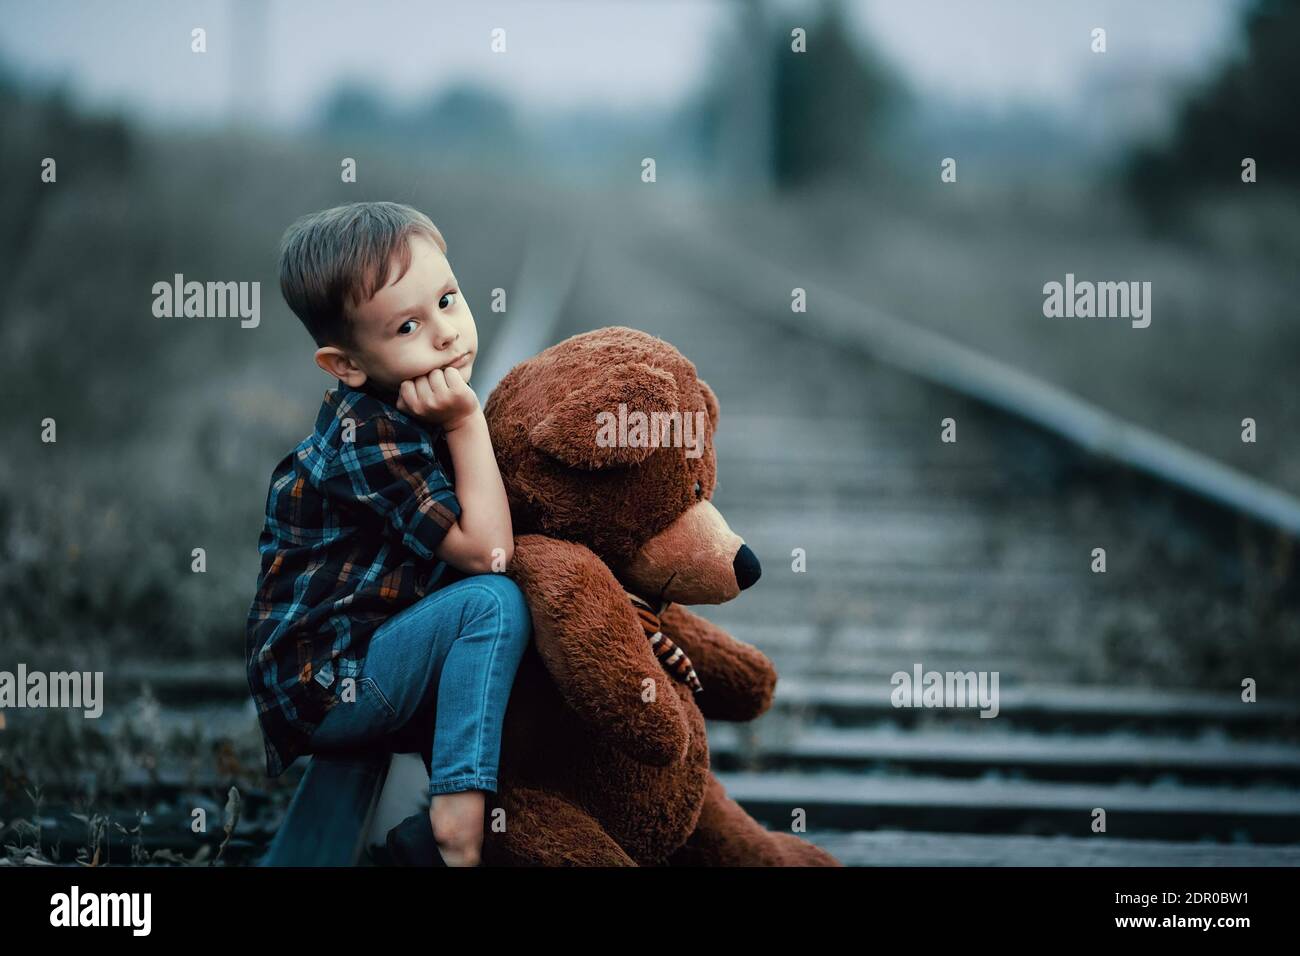 Boy With Teddy Bear Sitting On Railroad Track Stock Photo - Alamy